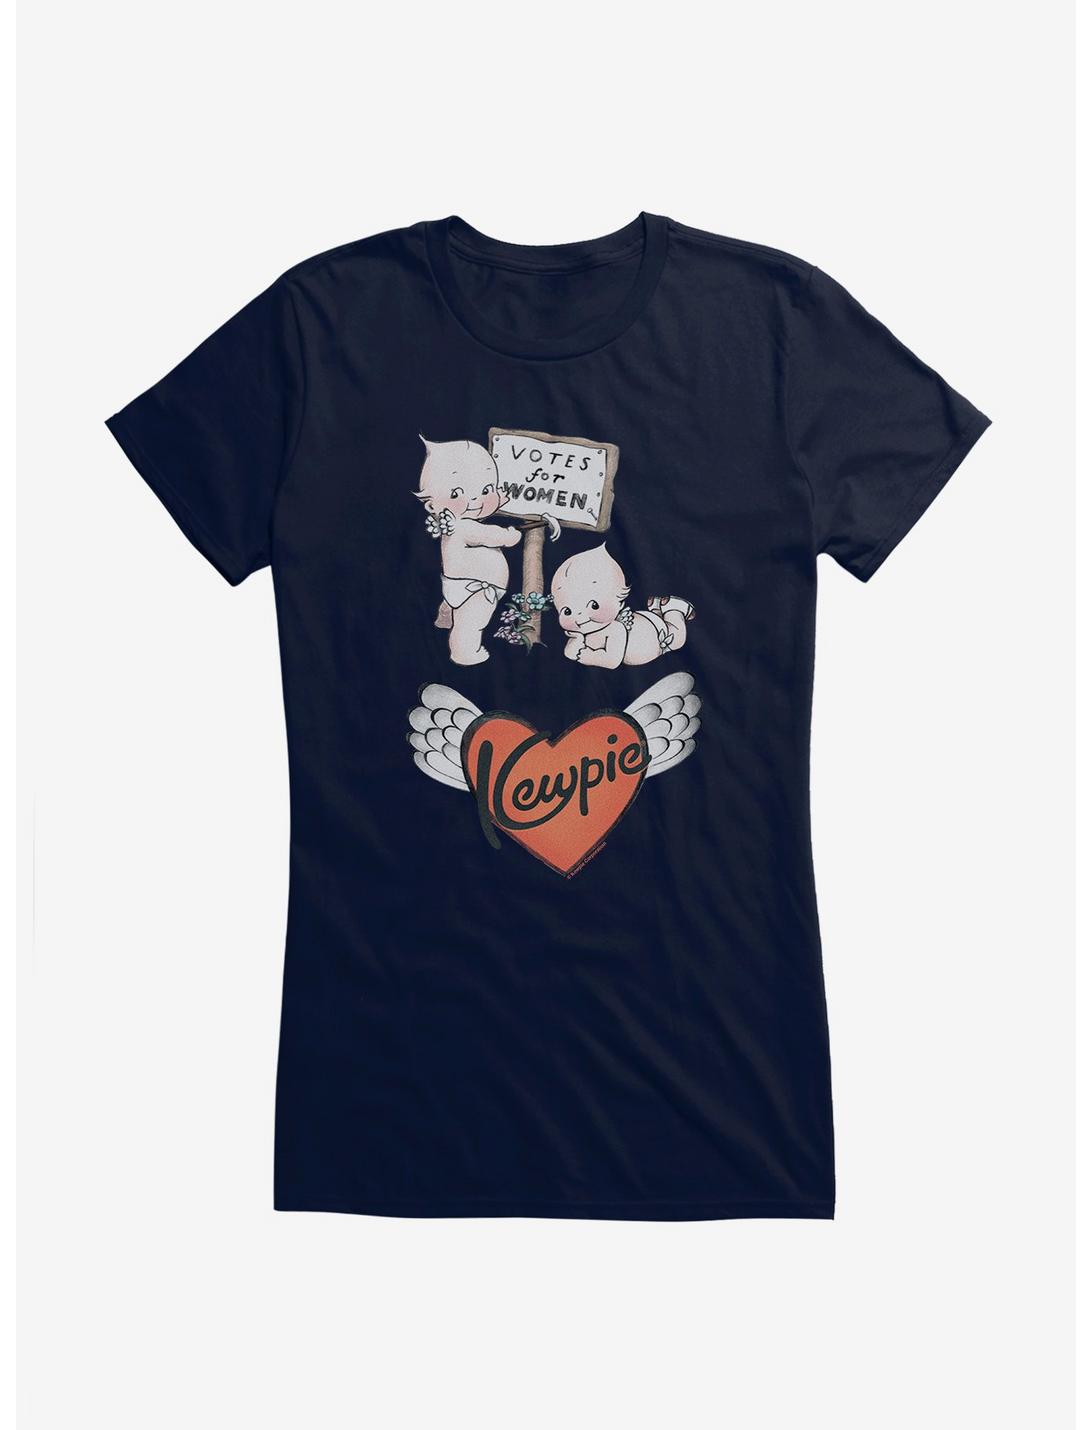 Kewpie Heart Logo Girls T-Shirt, , hi-res